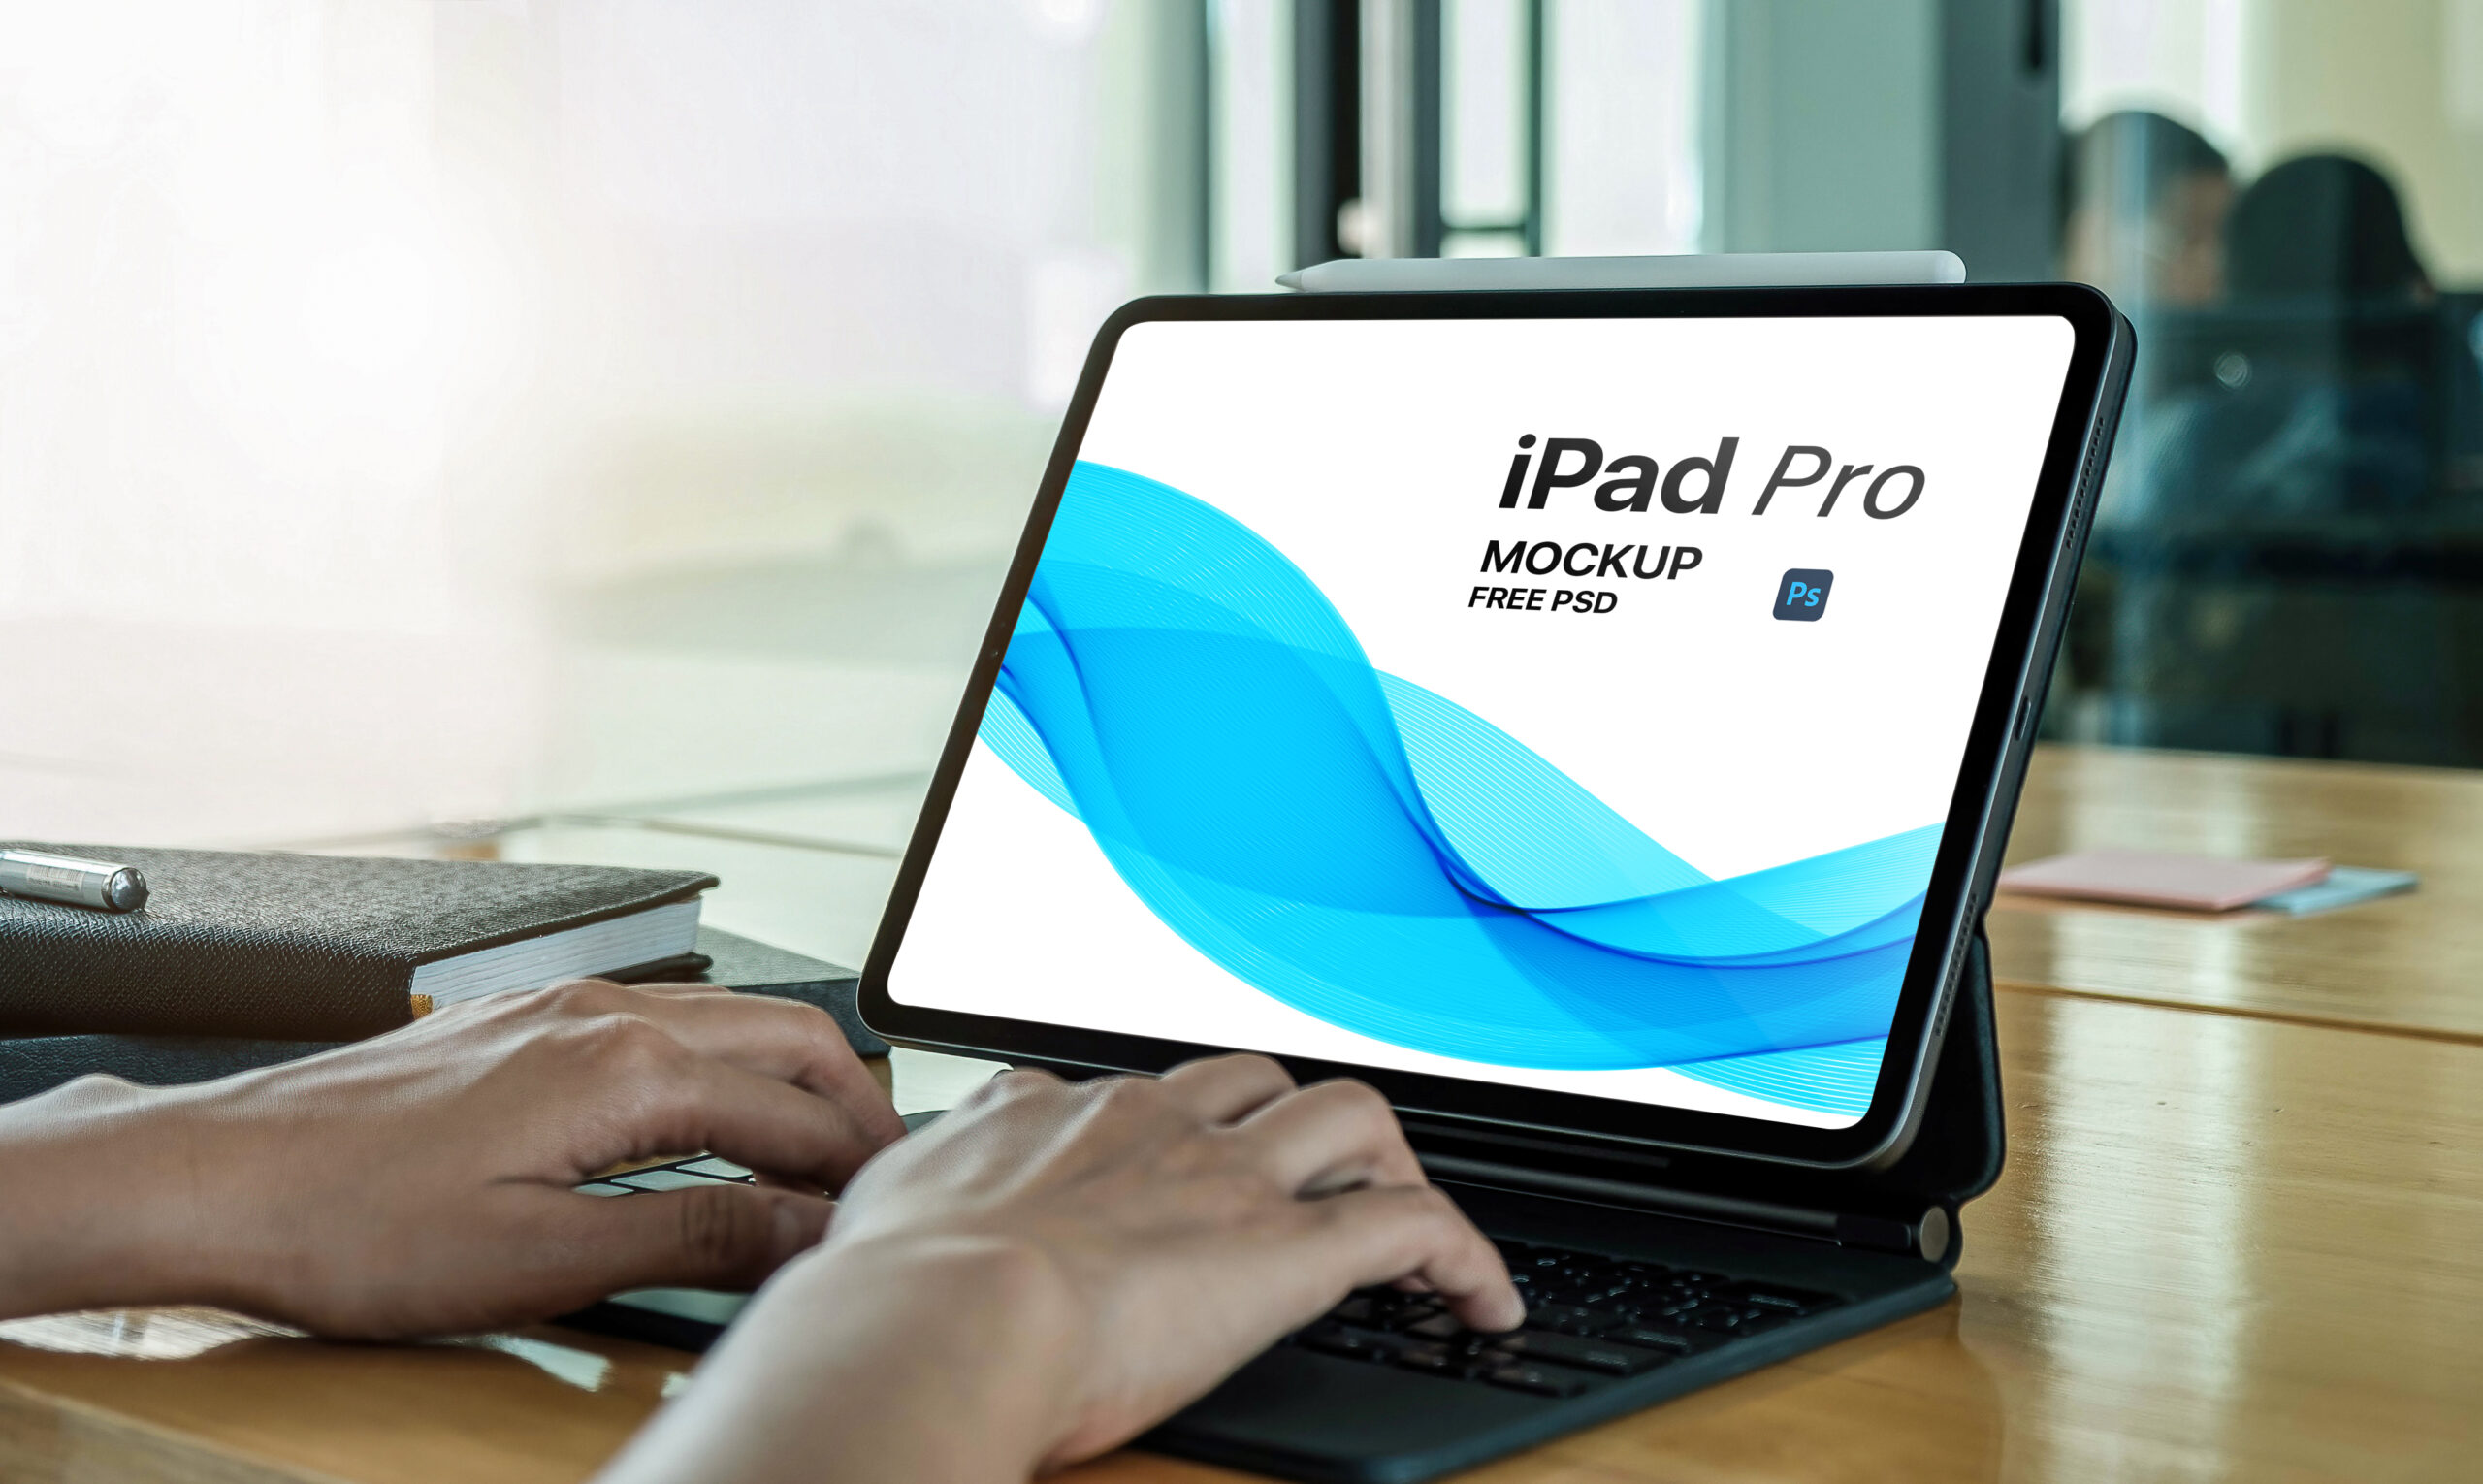 Apple iPad Pro Mockup Free PSD Download